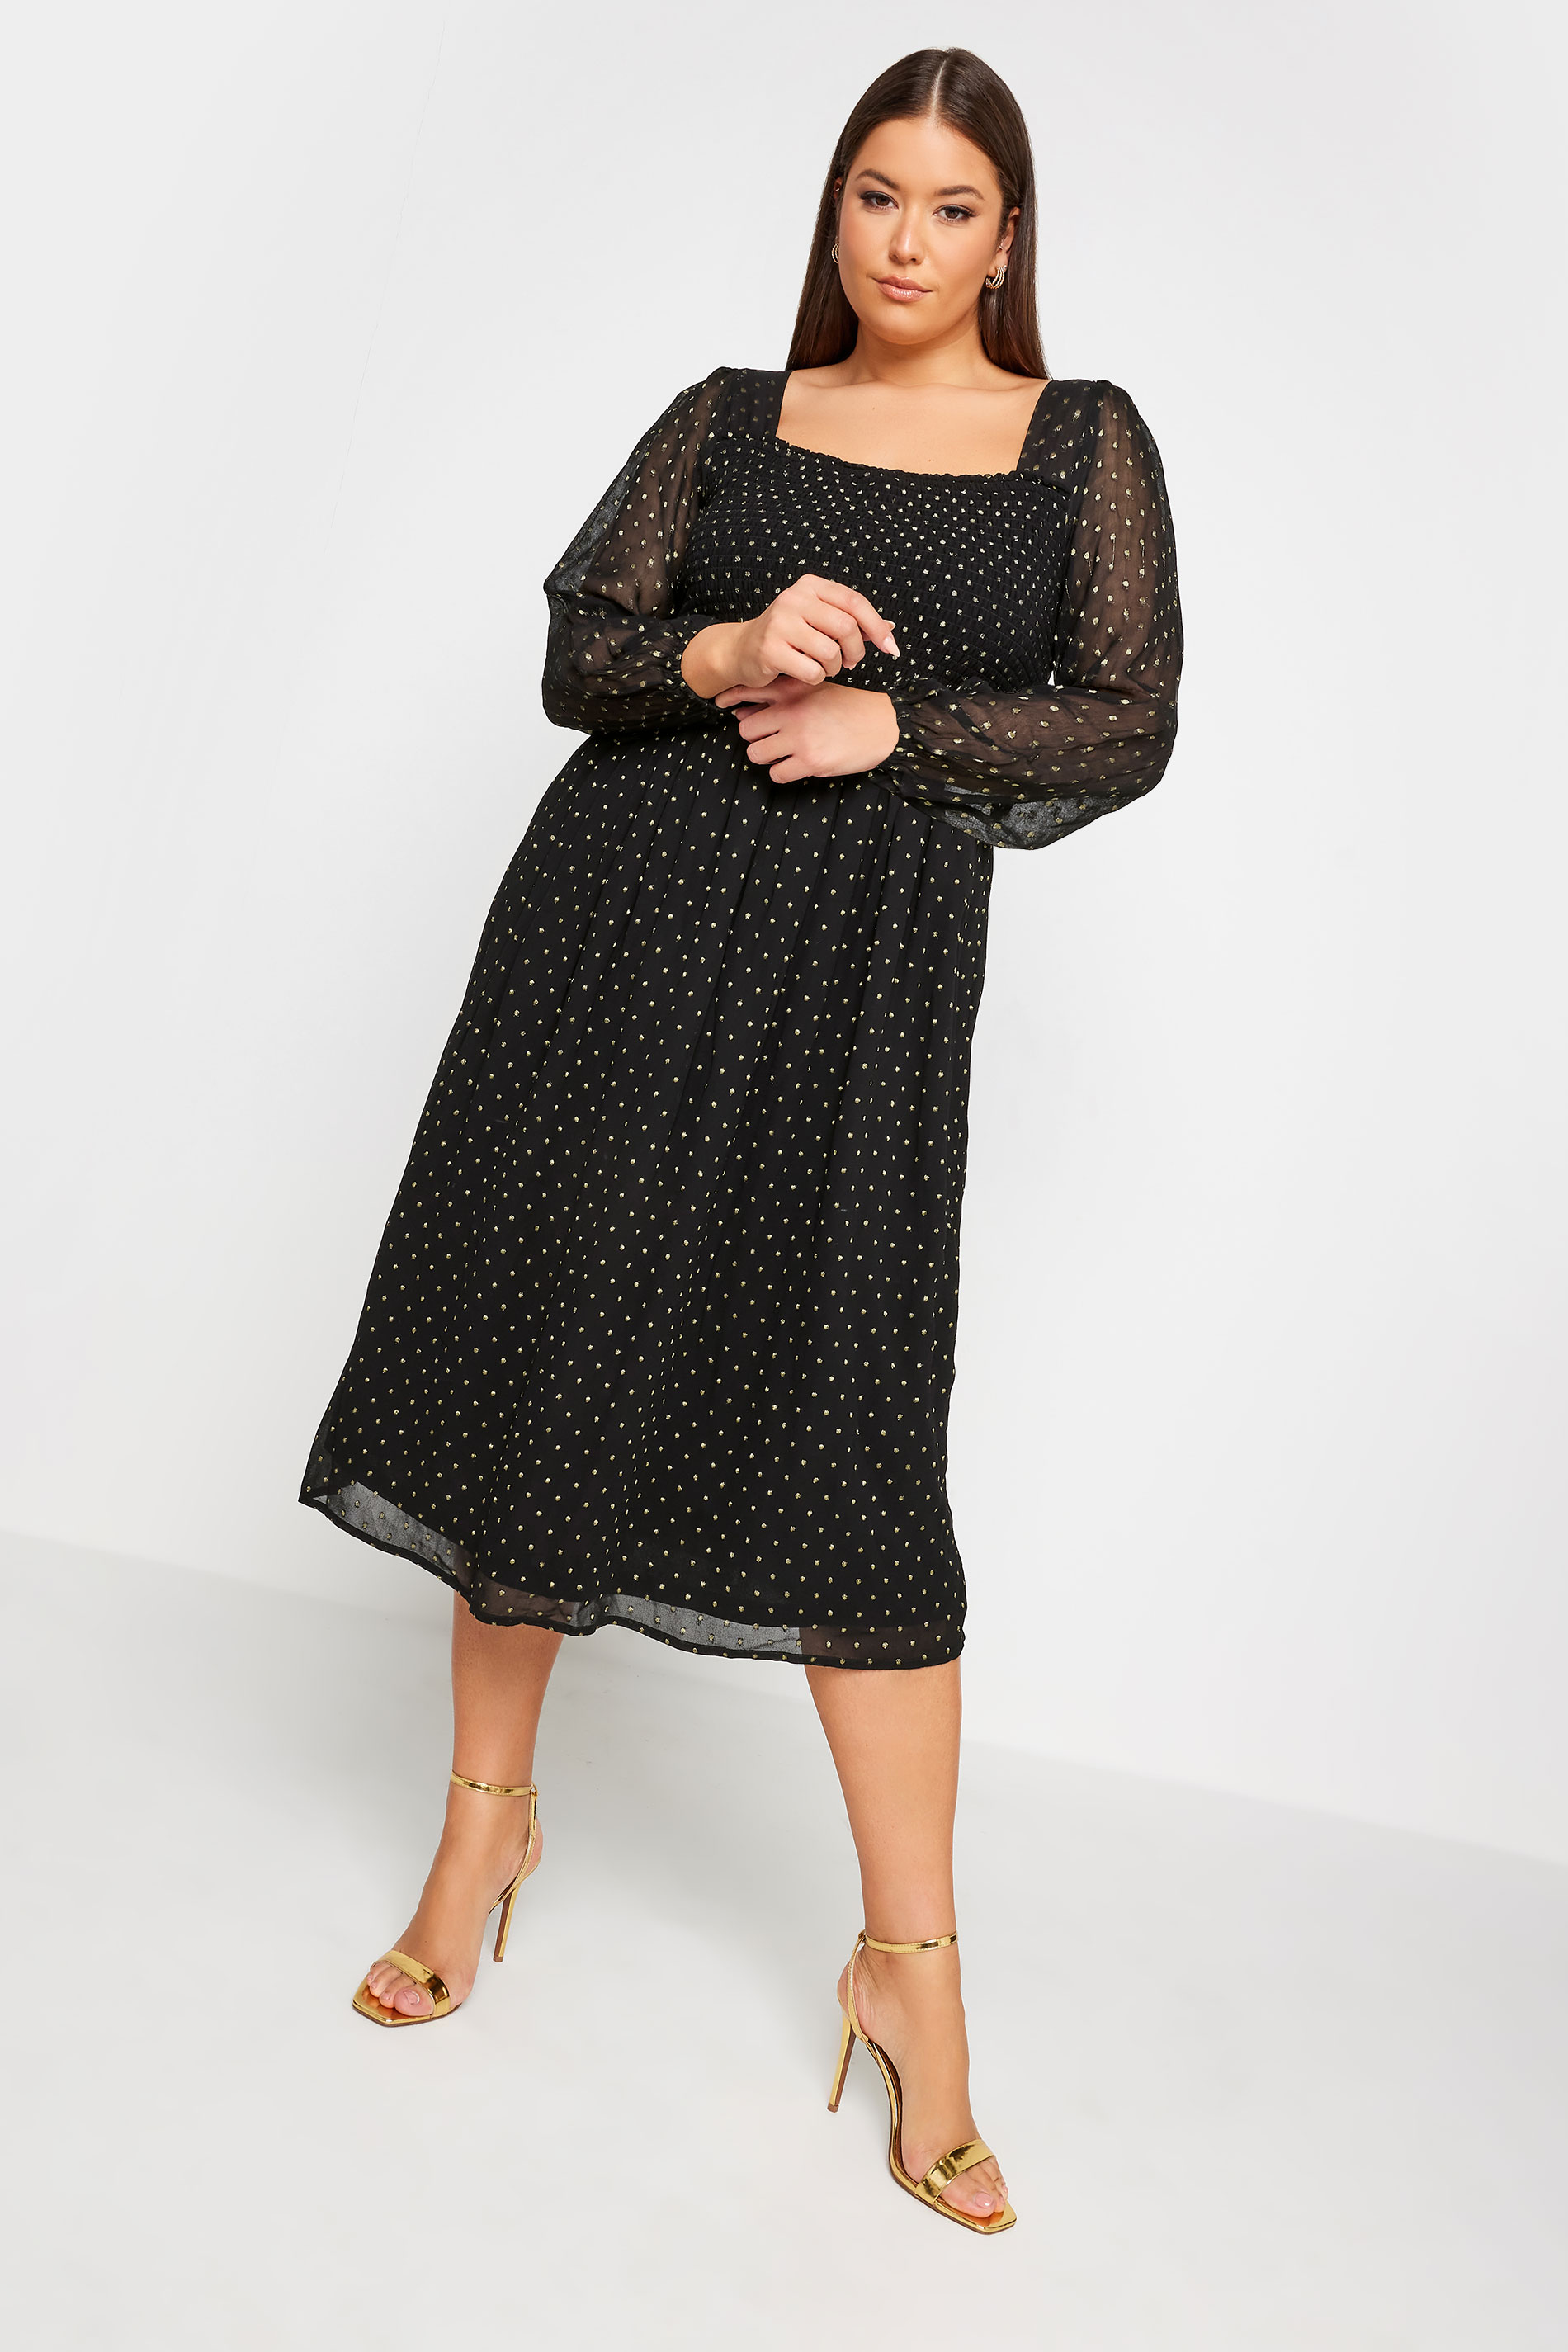 YOURS LONDON Plus Size Black Metallic Spot Print Shirred Midi Dress | Yours Clothing 1